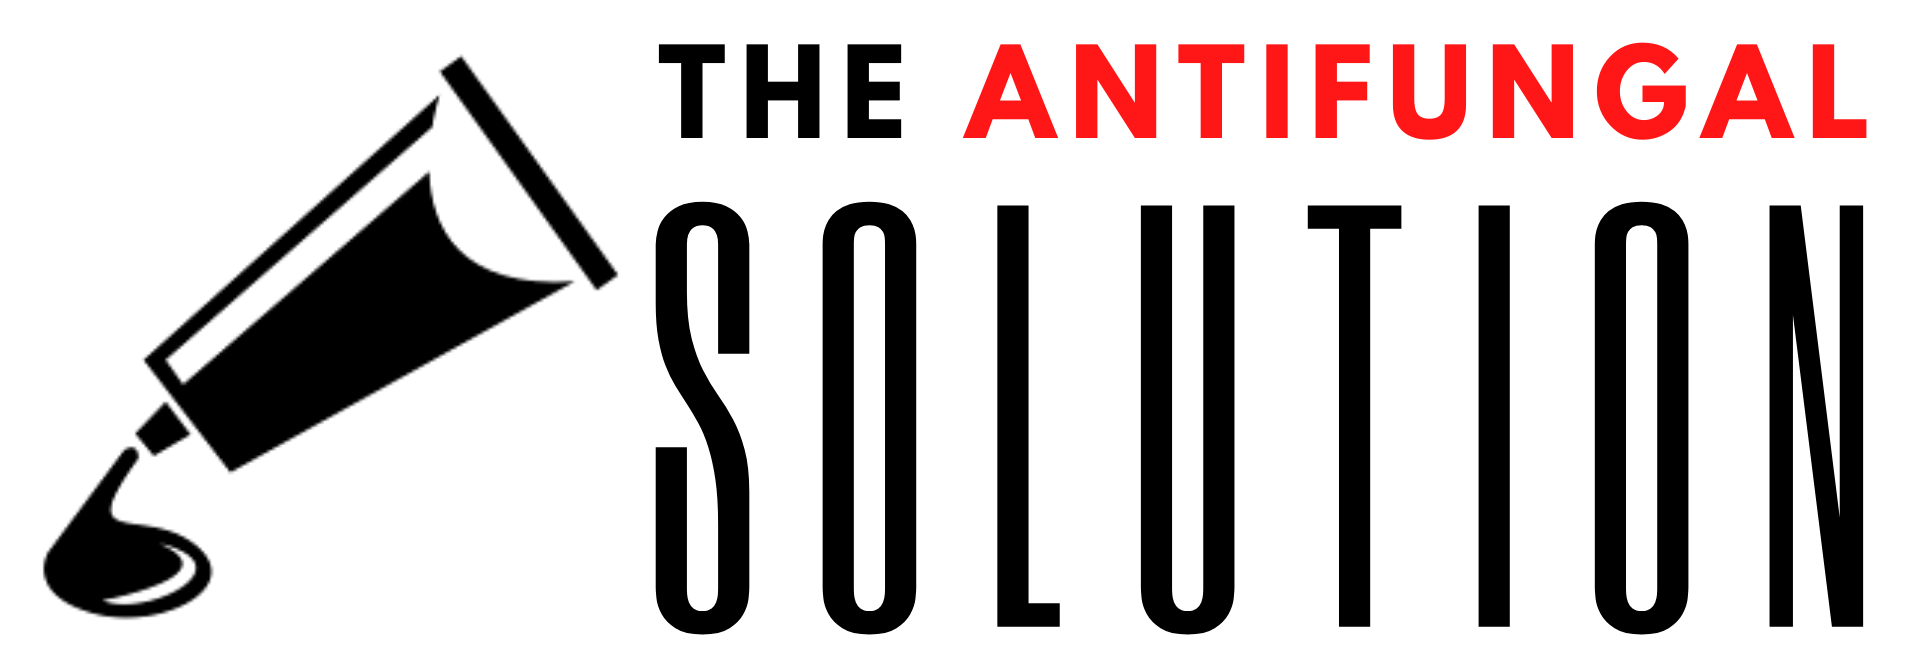 The antifungal solution logo